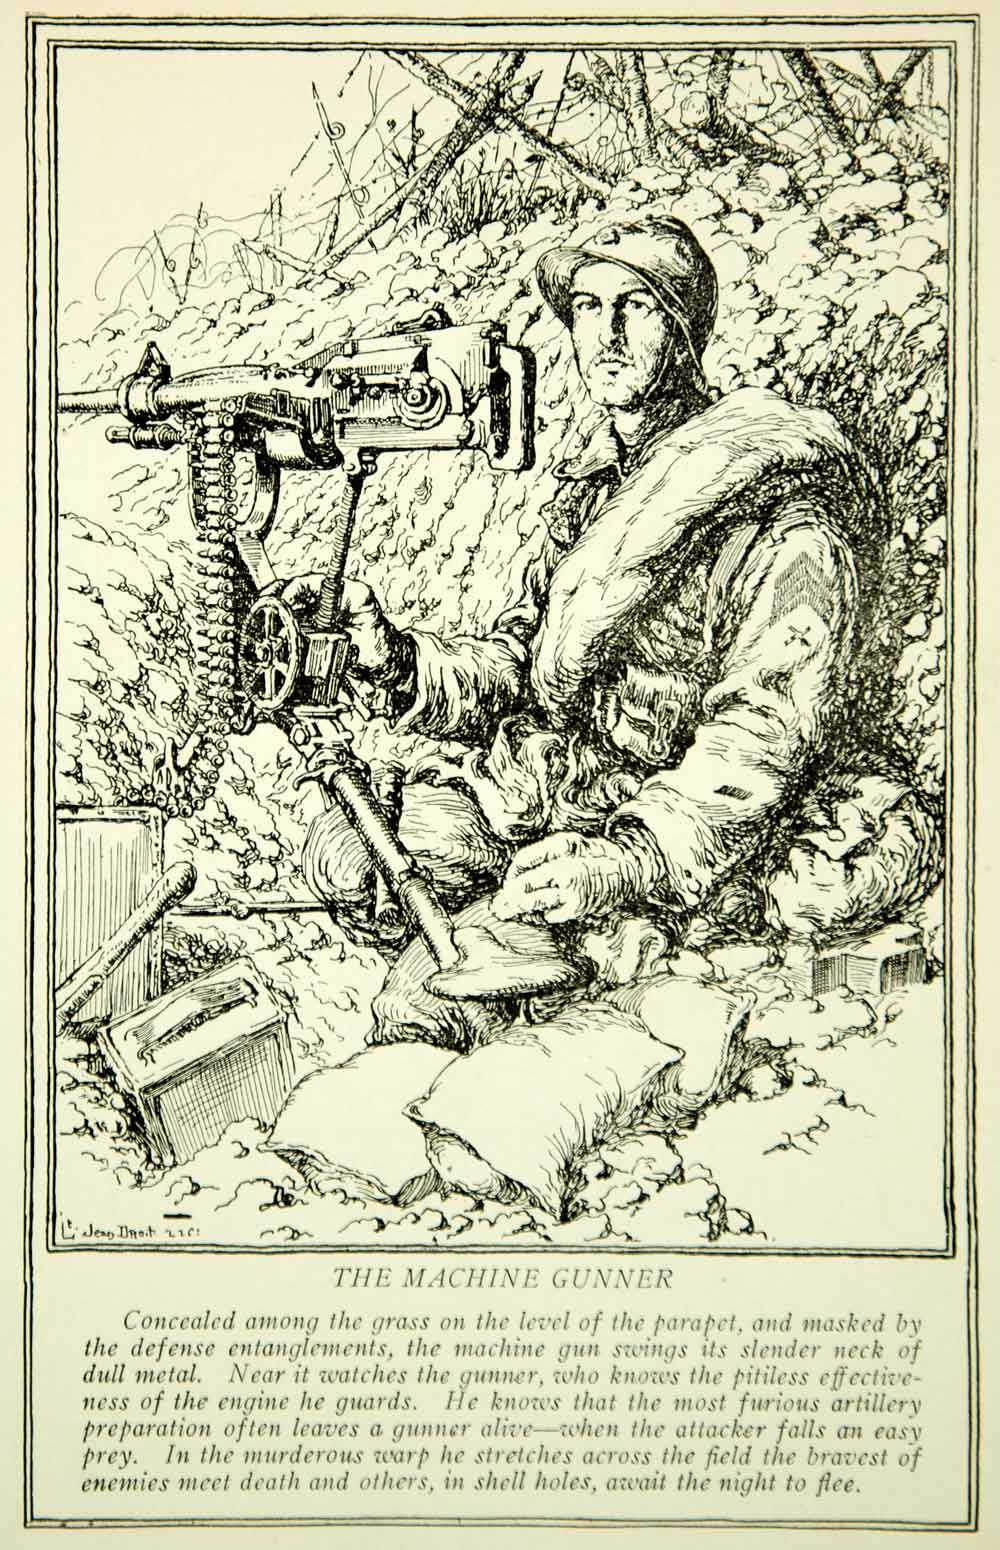 1918 Prints Jean Droit Art World War I Poilu French Infantry Soldiers Voltigeur